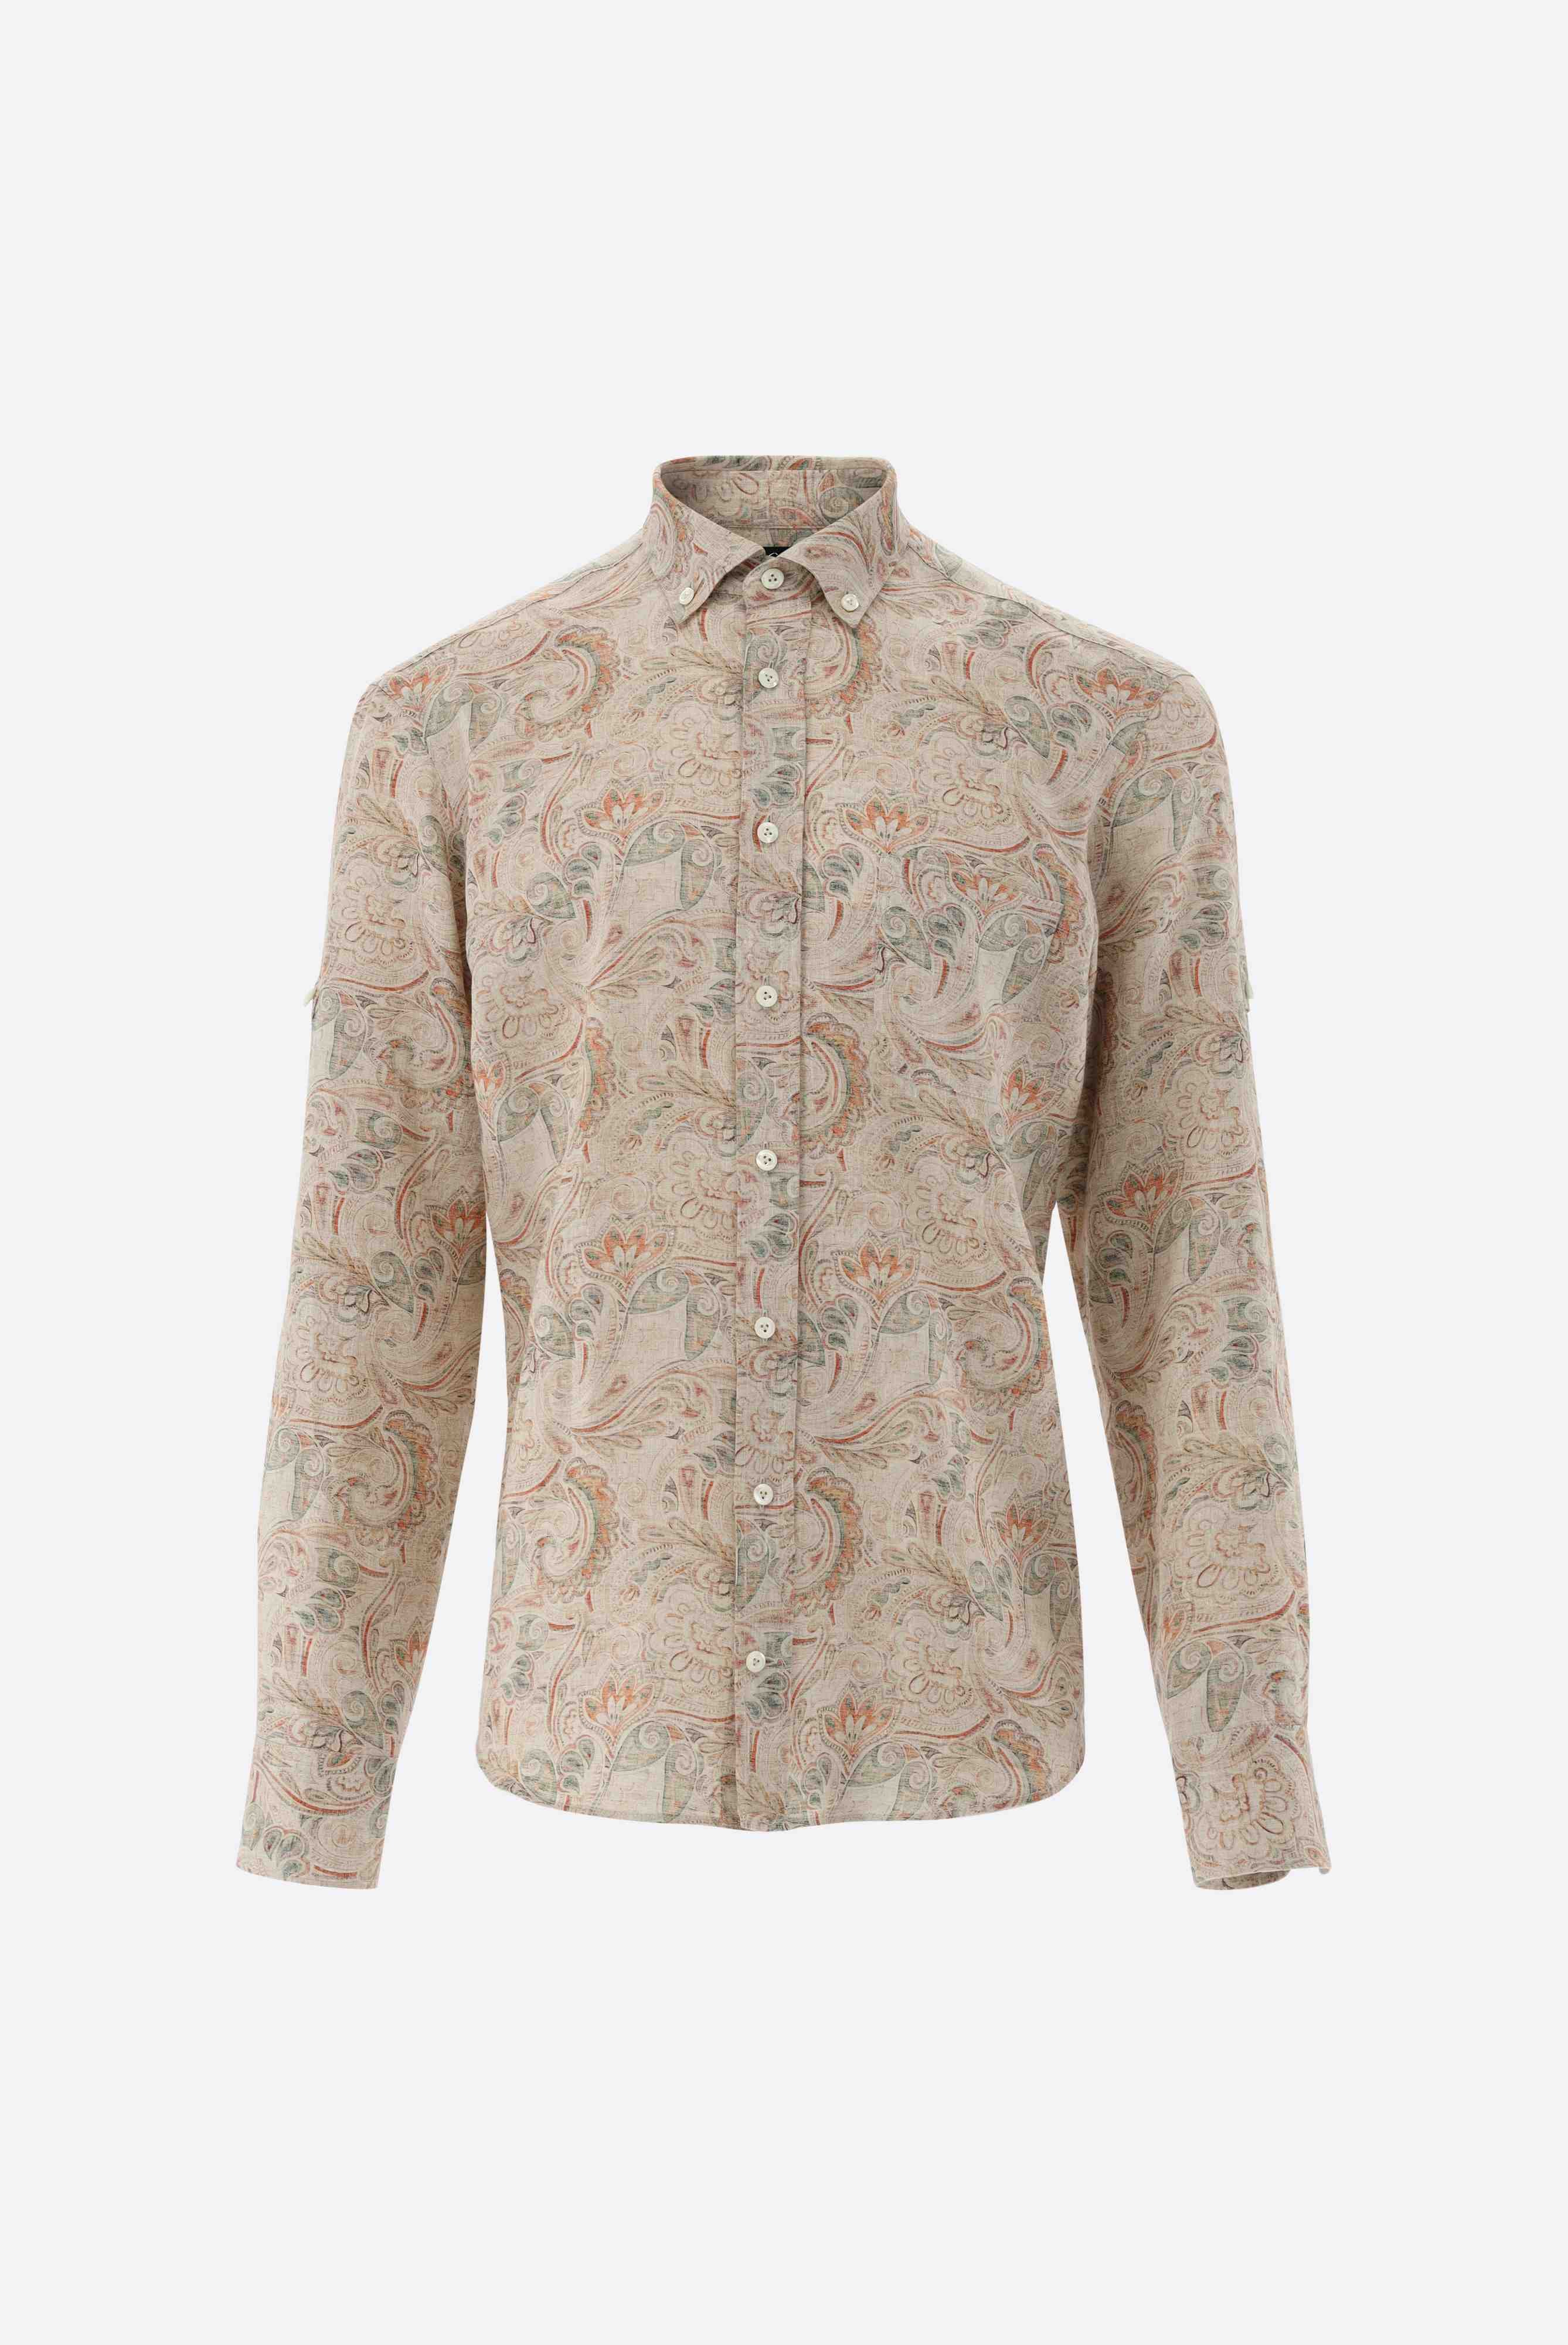 Casual Hemden+Leinenhemd mit Paisley-Druck Tailor Fit+20.2013.C4.172036.113.40